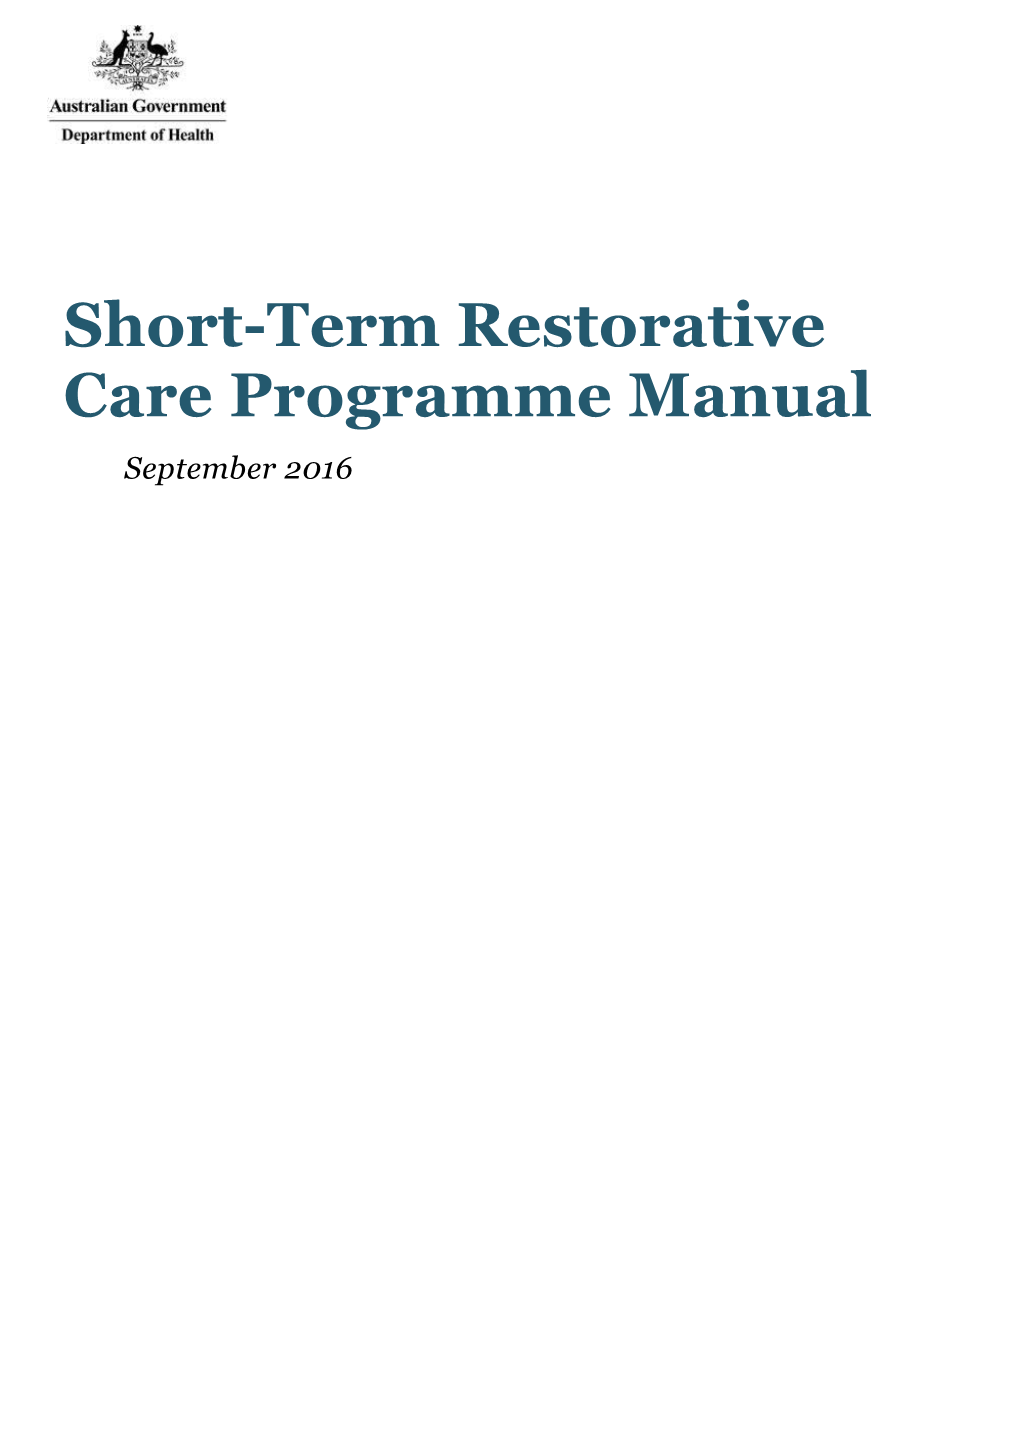 Short Term Restorative Programme Care Manual 2016